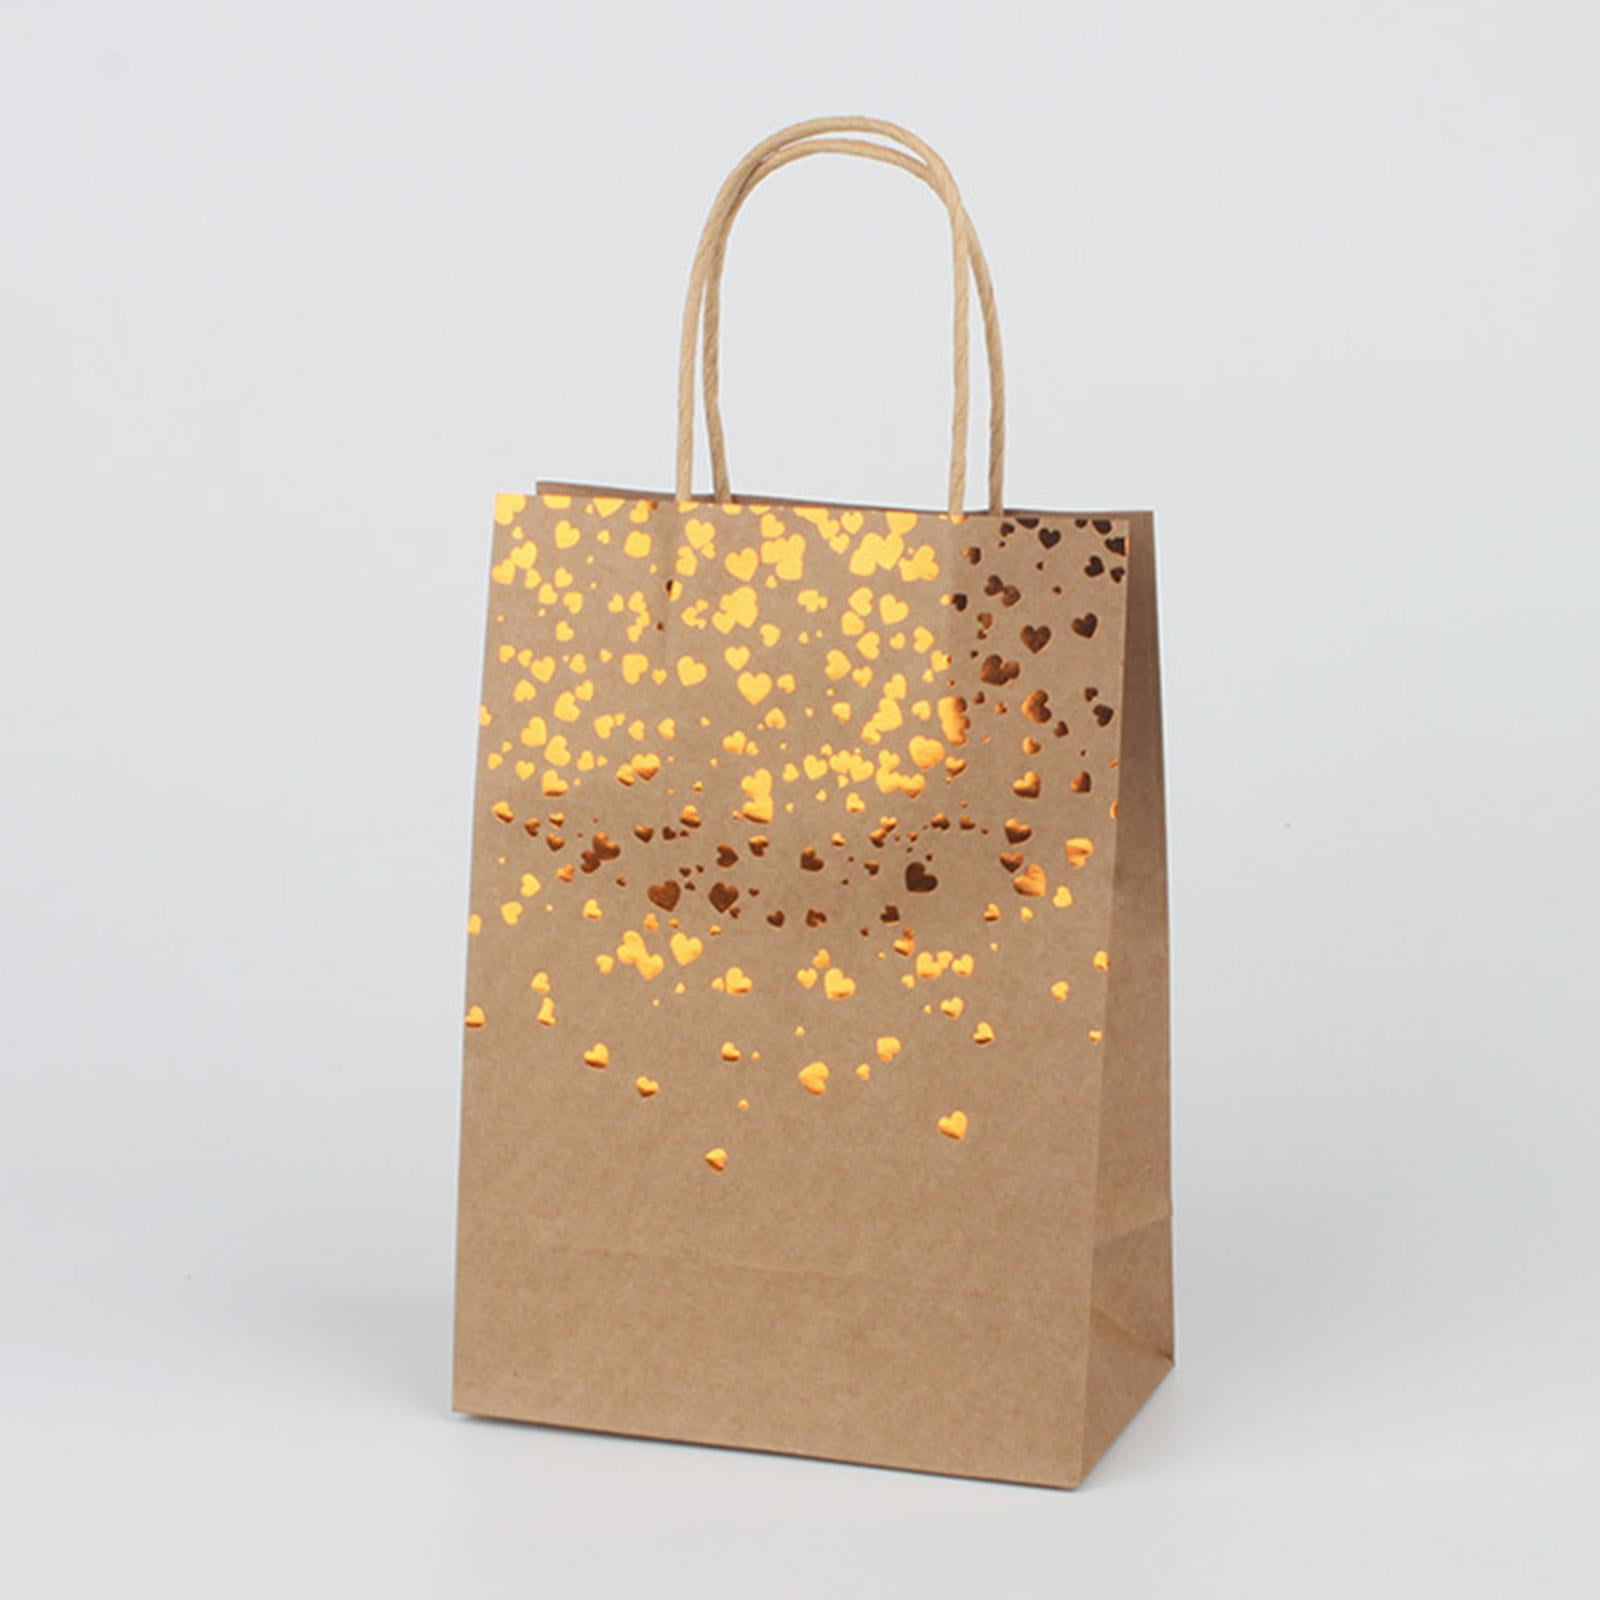 9pc Darice Paper Crafting Gift Bag Handles Bags 8×10×4 Black & White